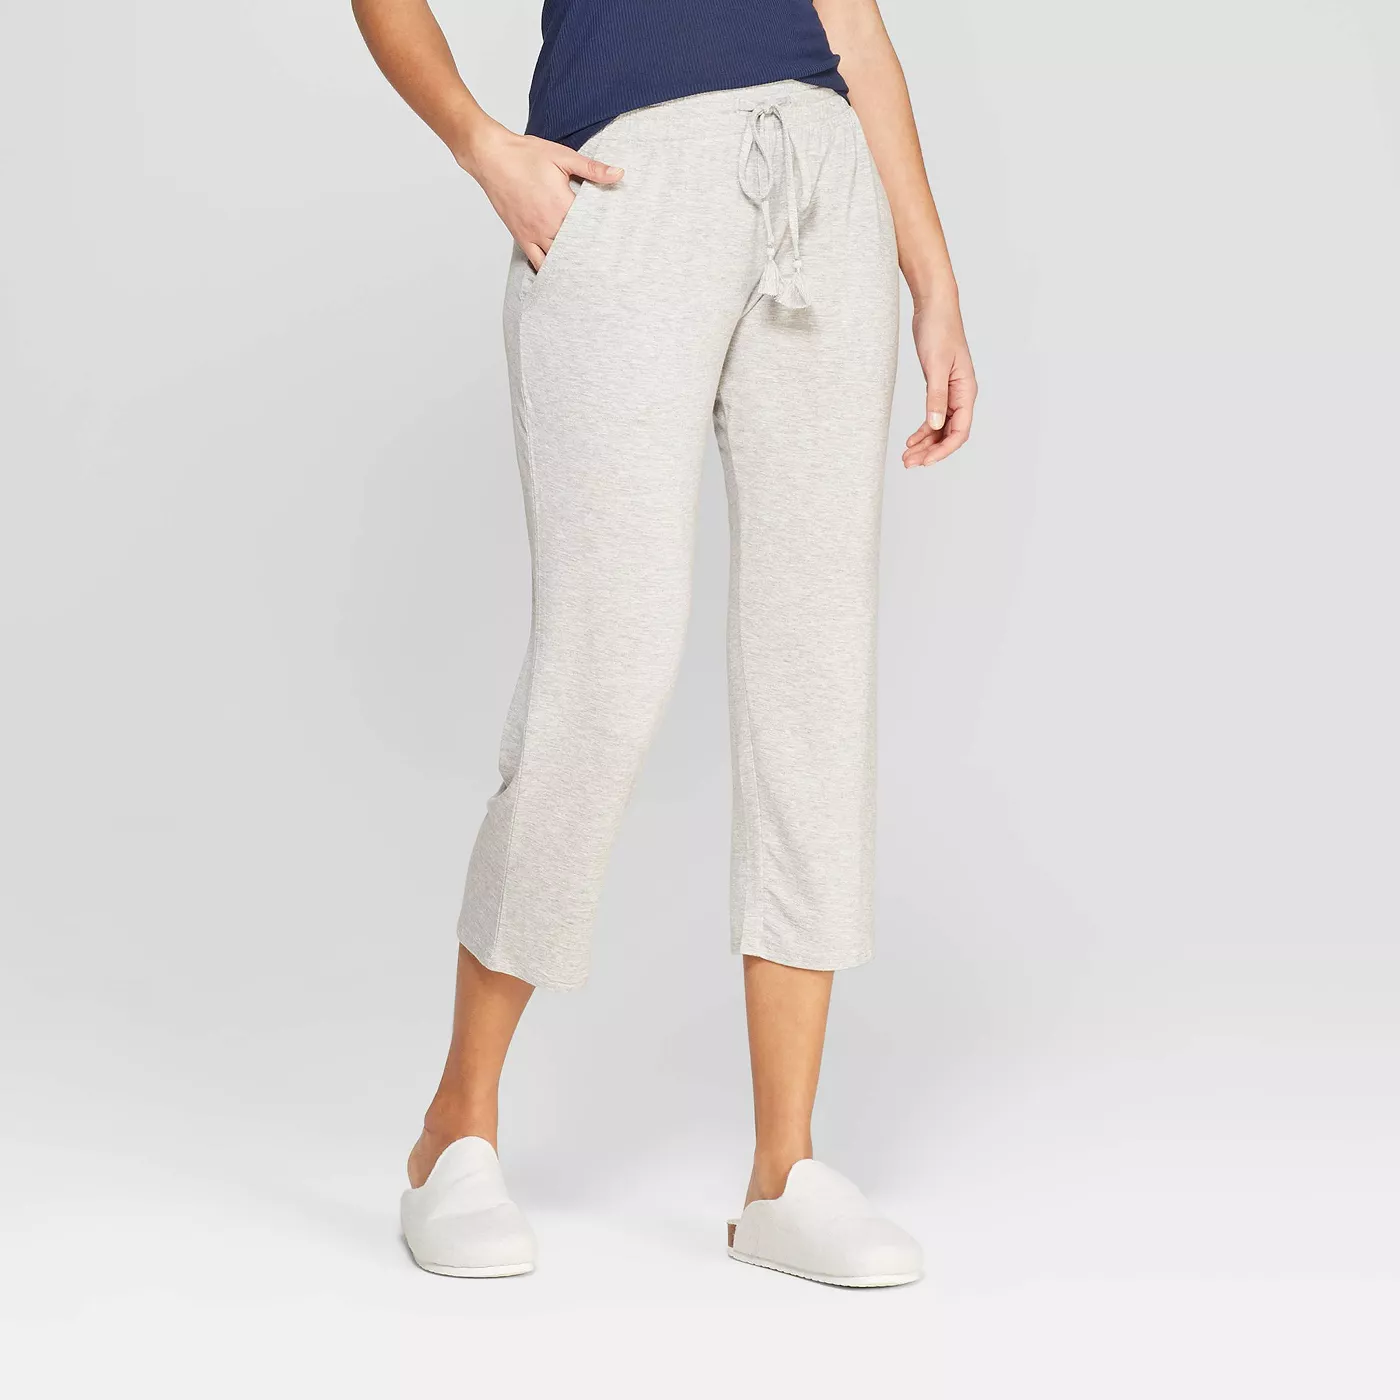 Women's Beautifully Soft Crop Pajama Pants - Stars Above™ - image 1 of 2